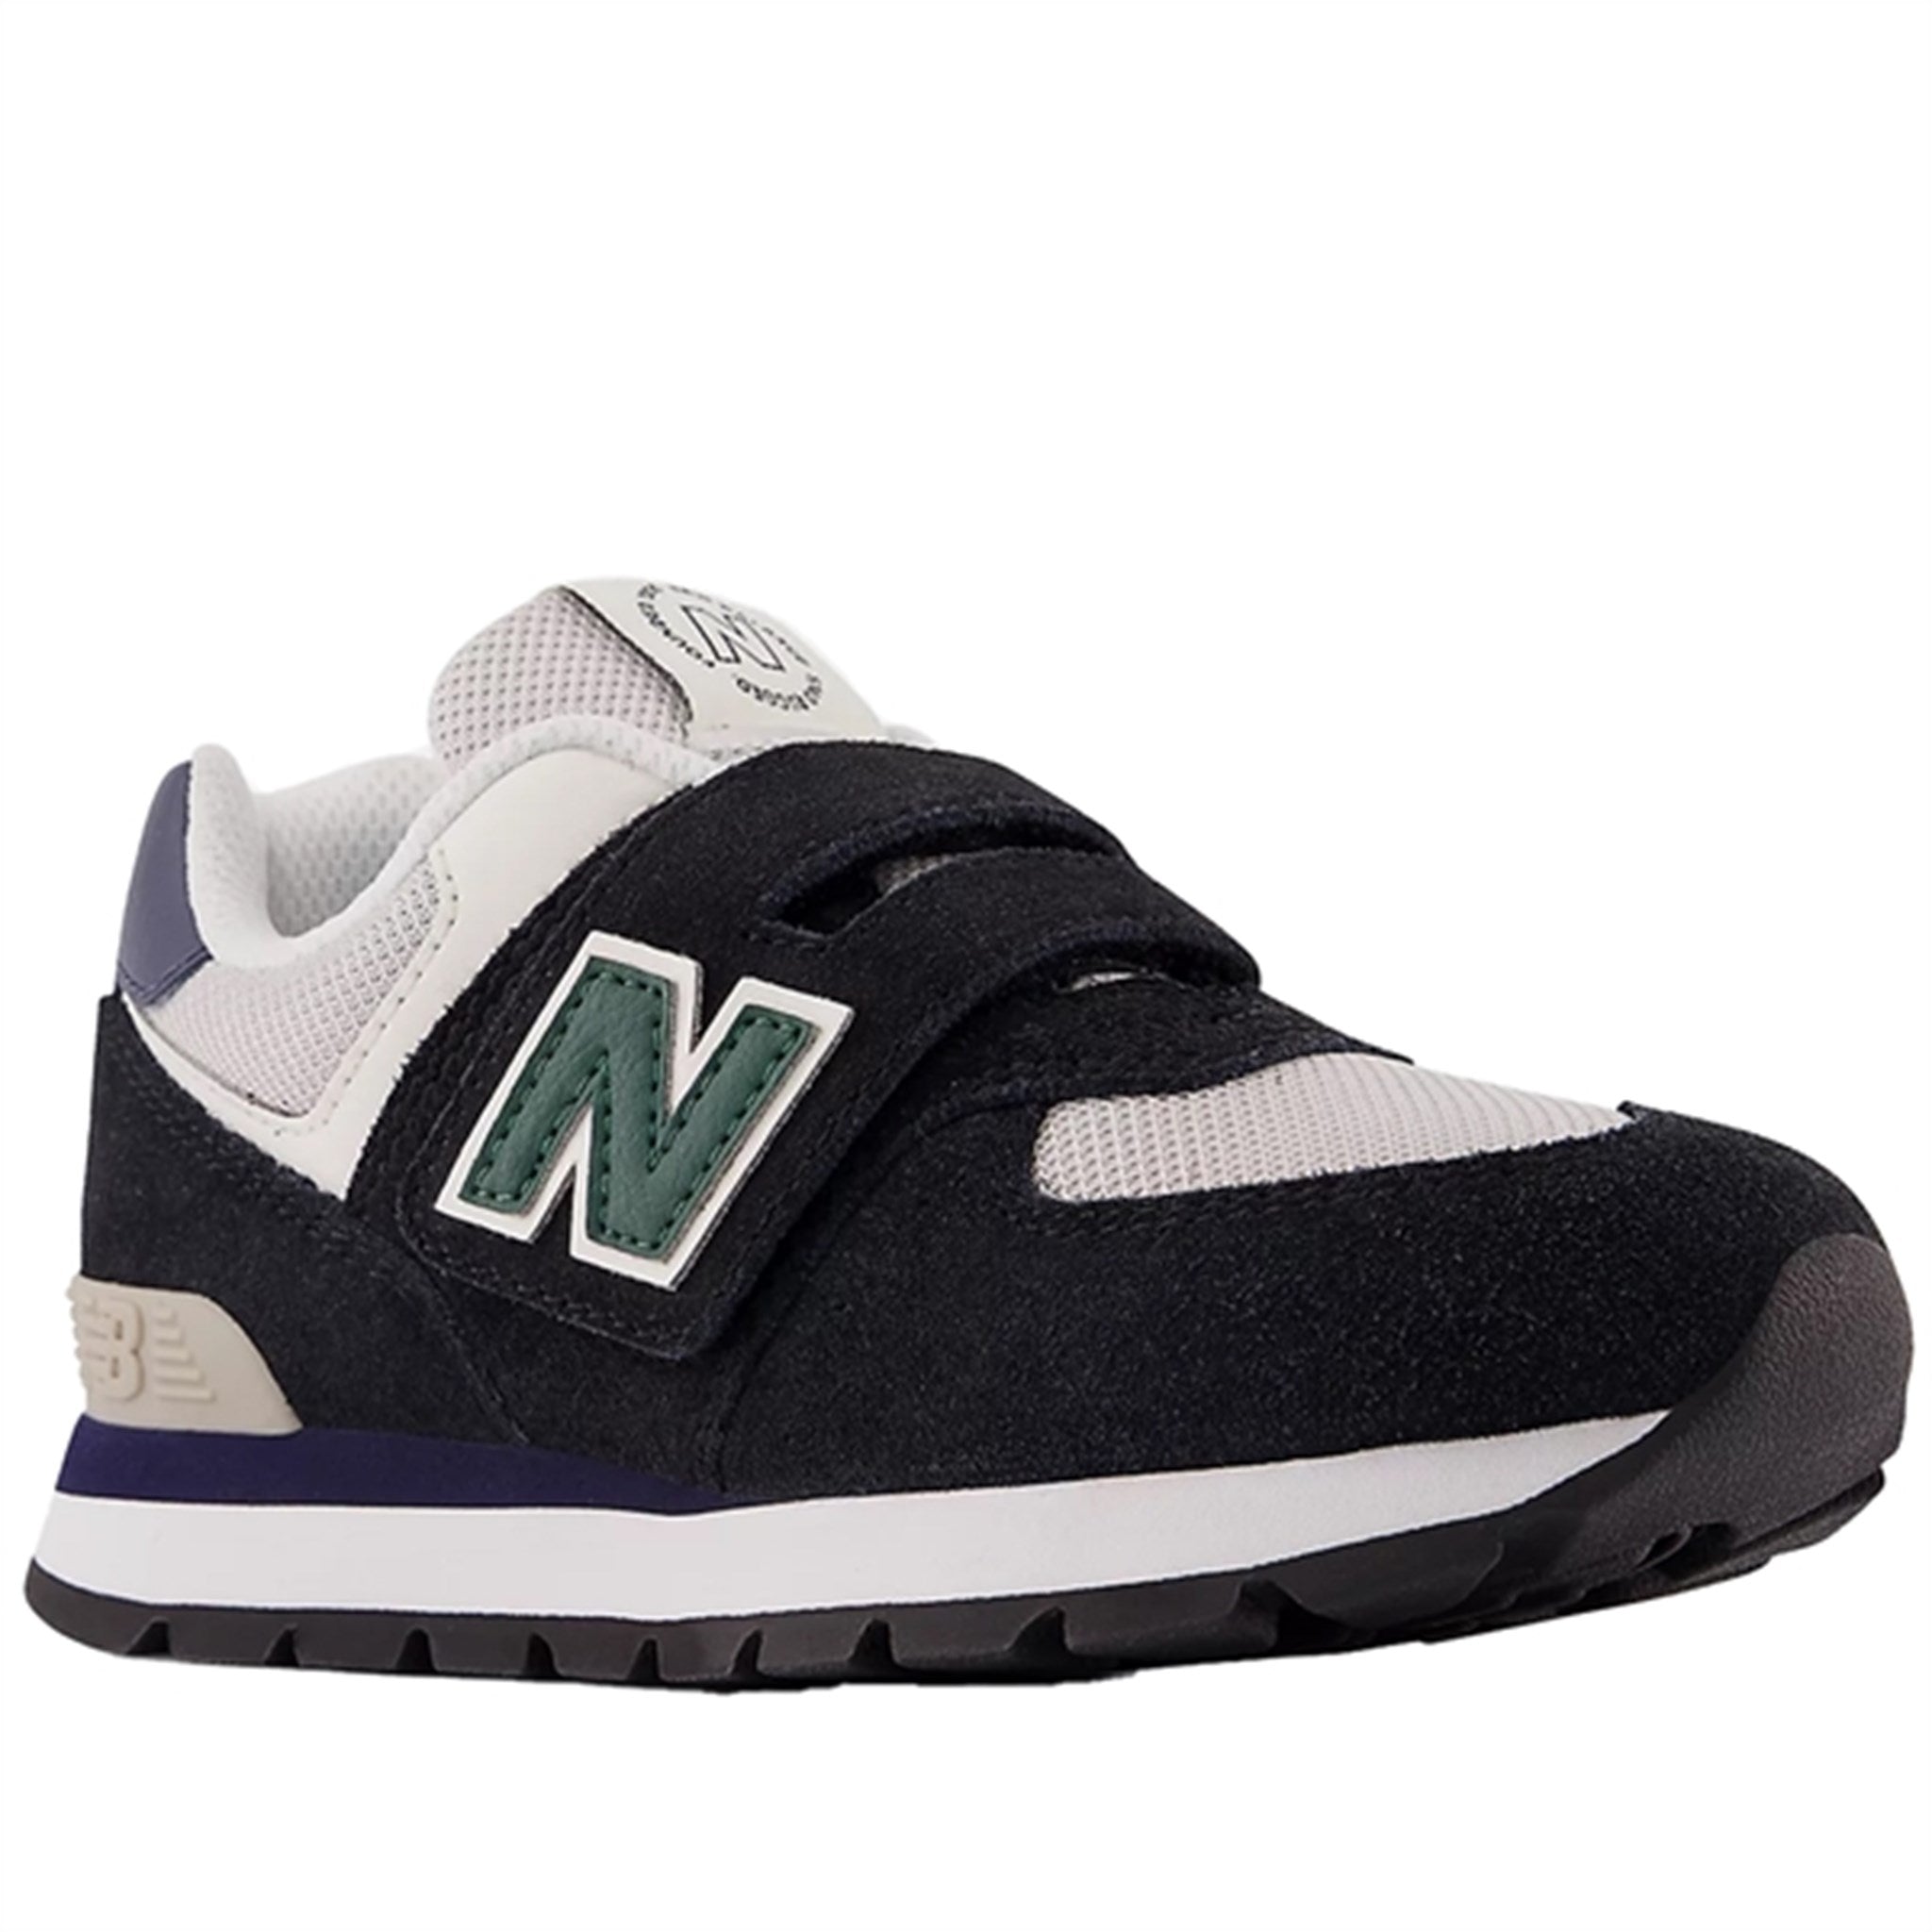 New Balance 574 Black/Navy/Nightwatch Green Sneakers 2